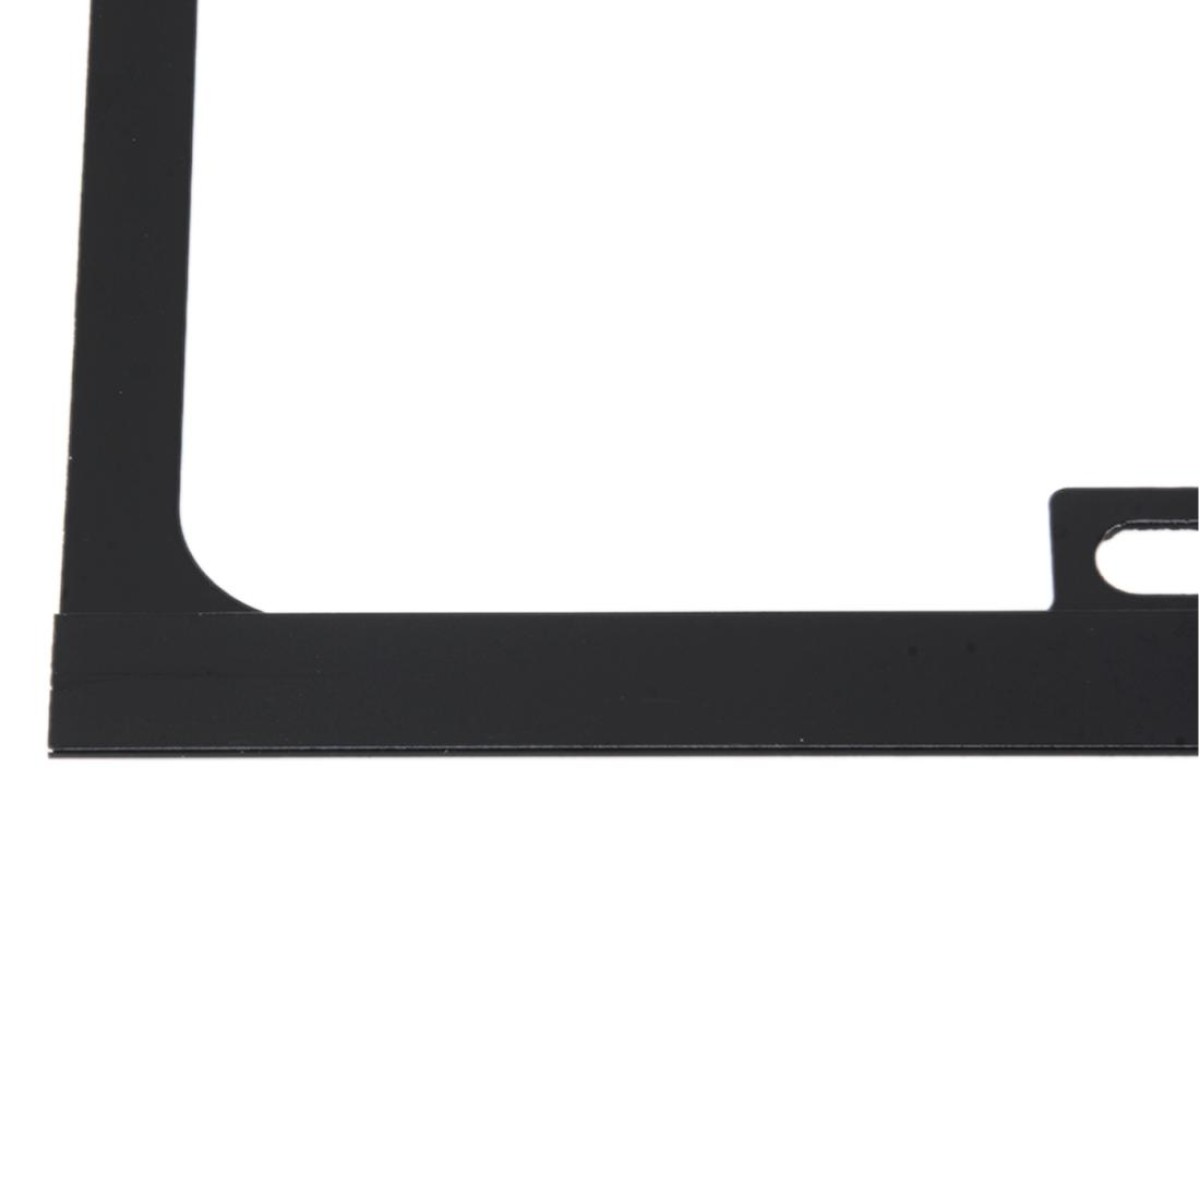 2 PCS Car License Plate Frames Car Styling License Plate Frame Magnesium Alloy Universal License Plate Holder Car Accessories(Black)